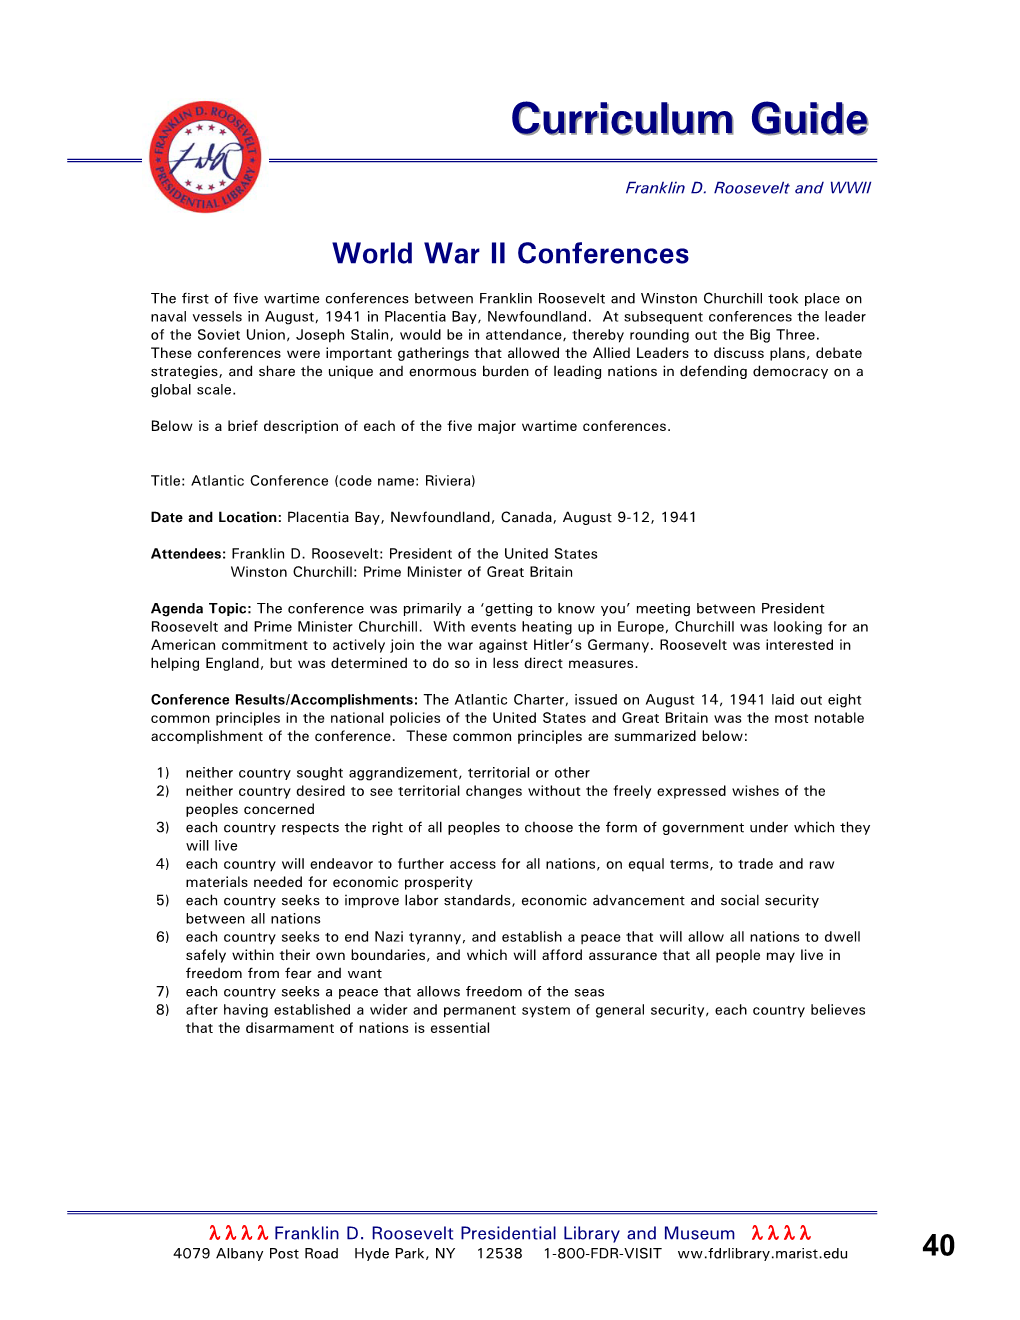 World War II Conferences